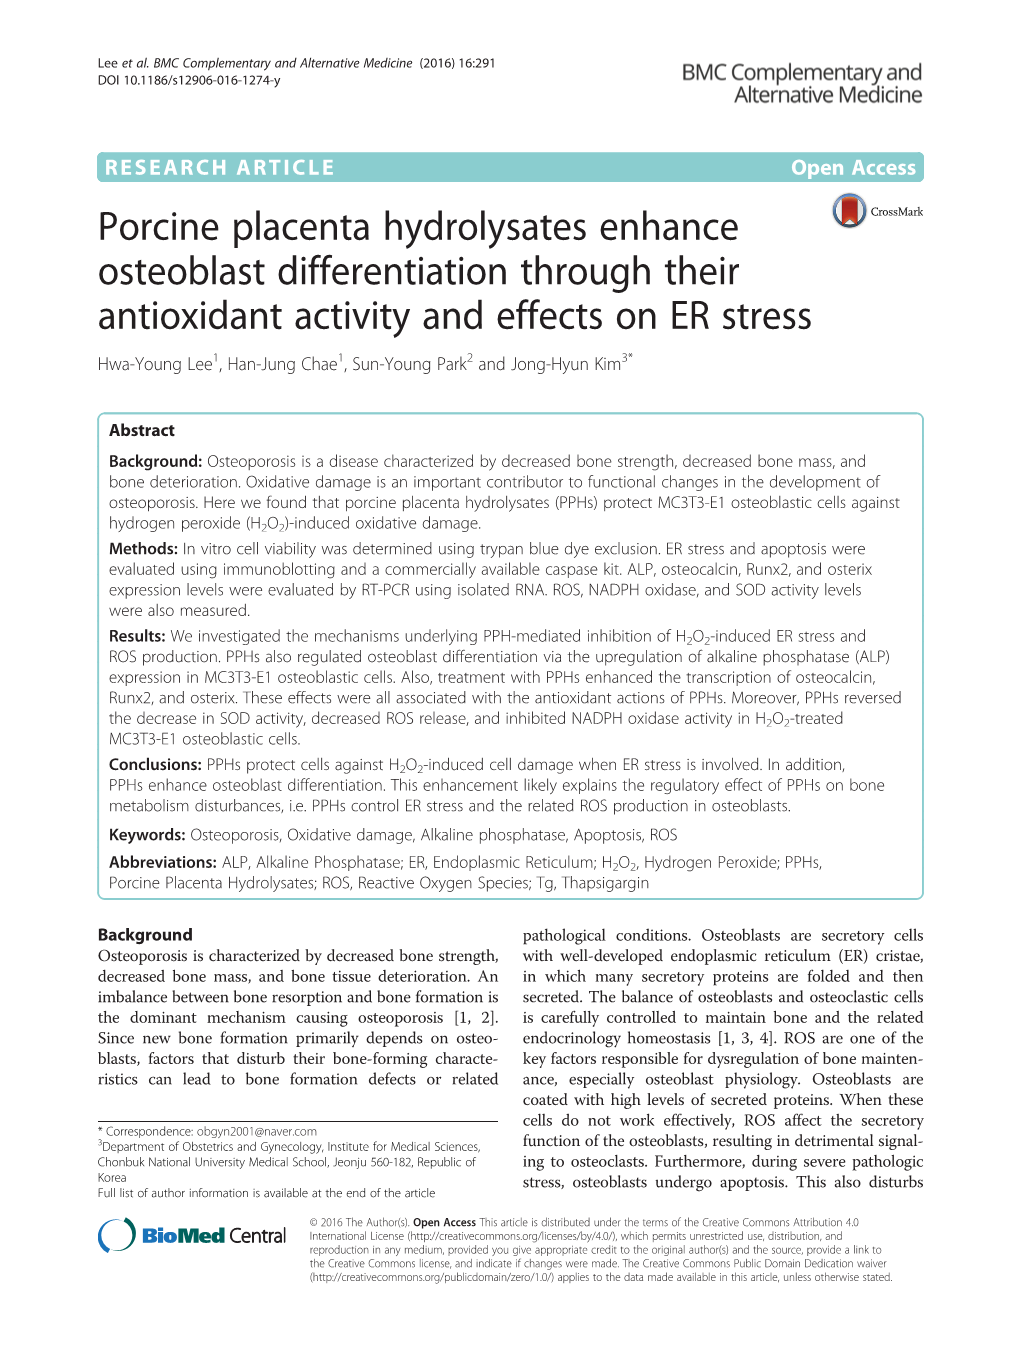 Porcine Placenta Hydrolysates Enhance Osteoblast Differentiation Through Their Antioxidant Activity and Effects on ER Stress